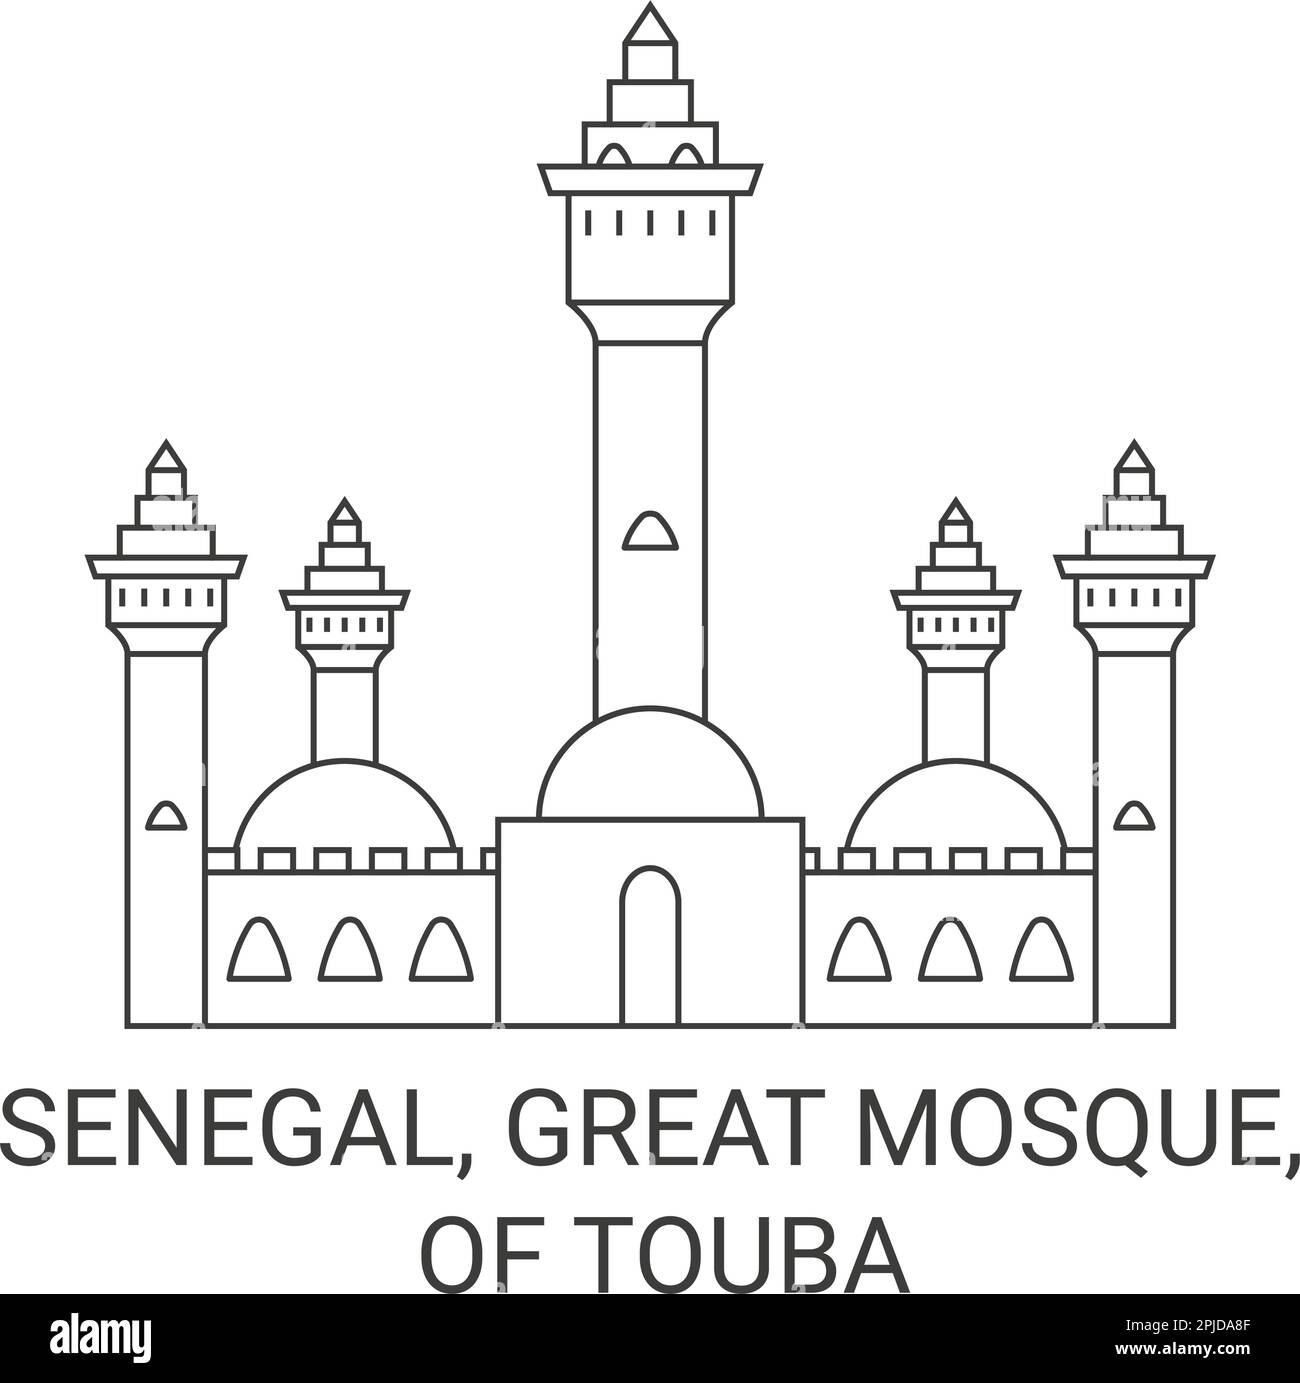 Senegal, Great Mosque, Of Touba travel landmark vector illustration ...